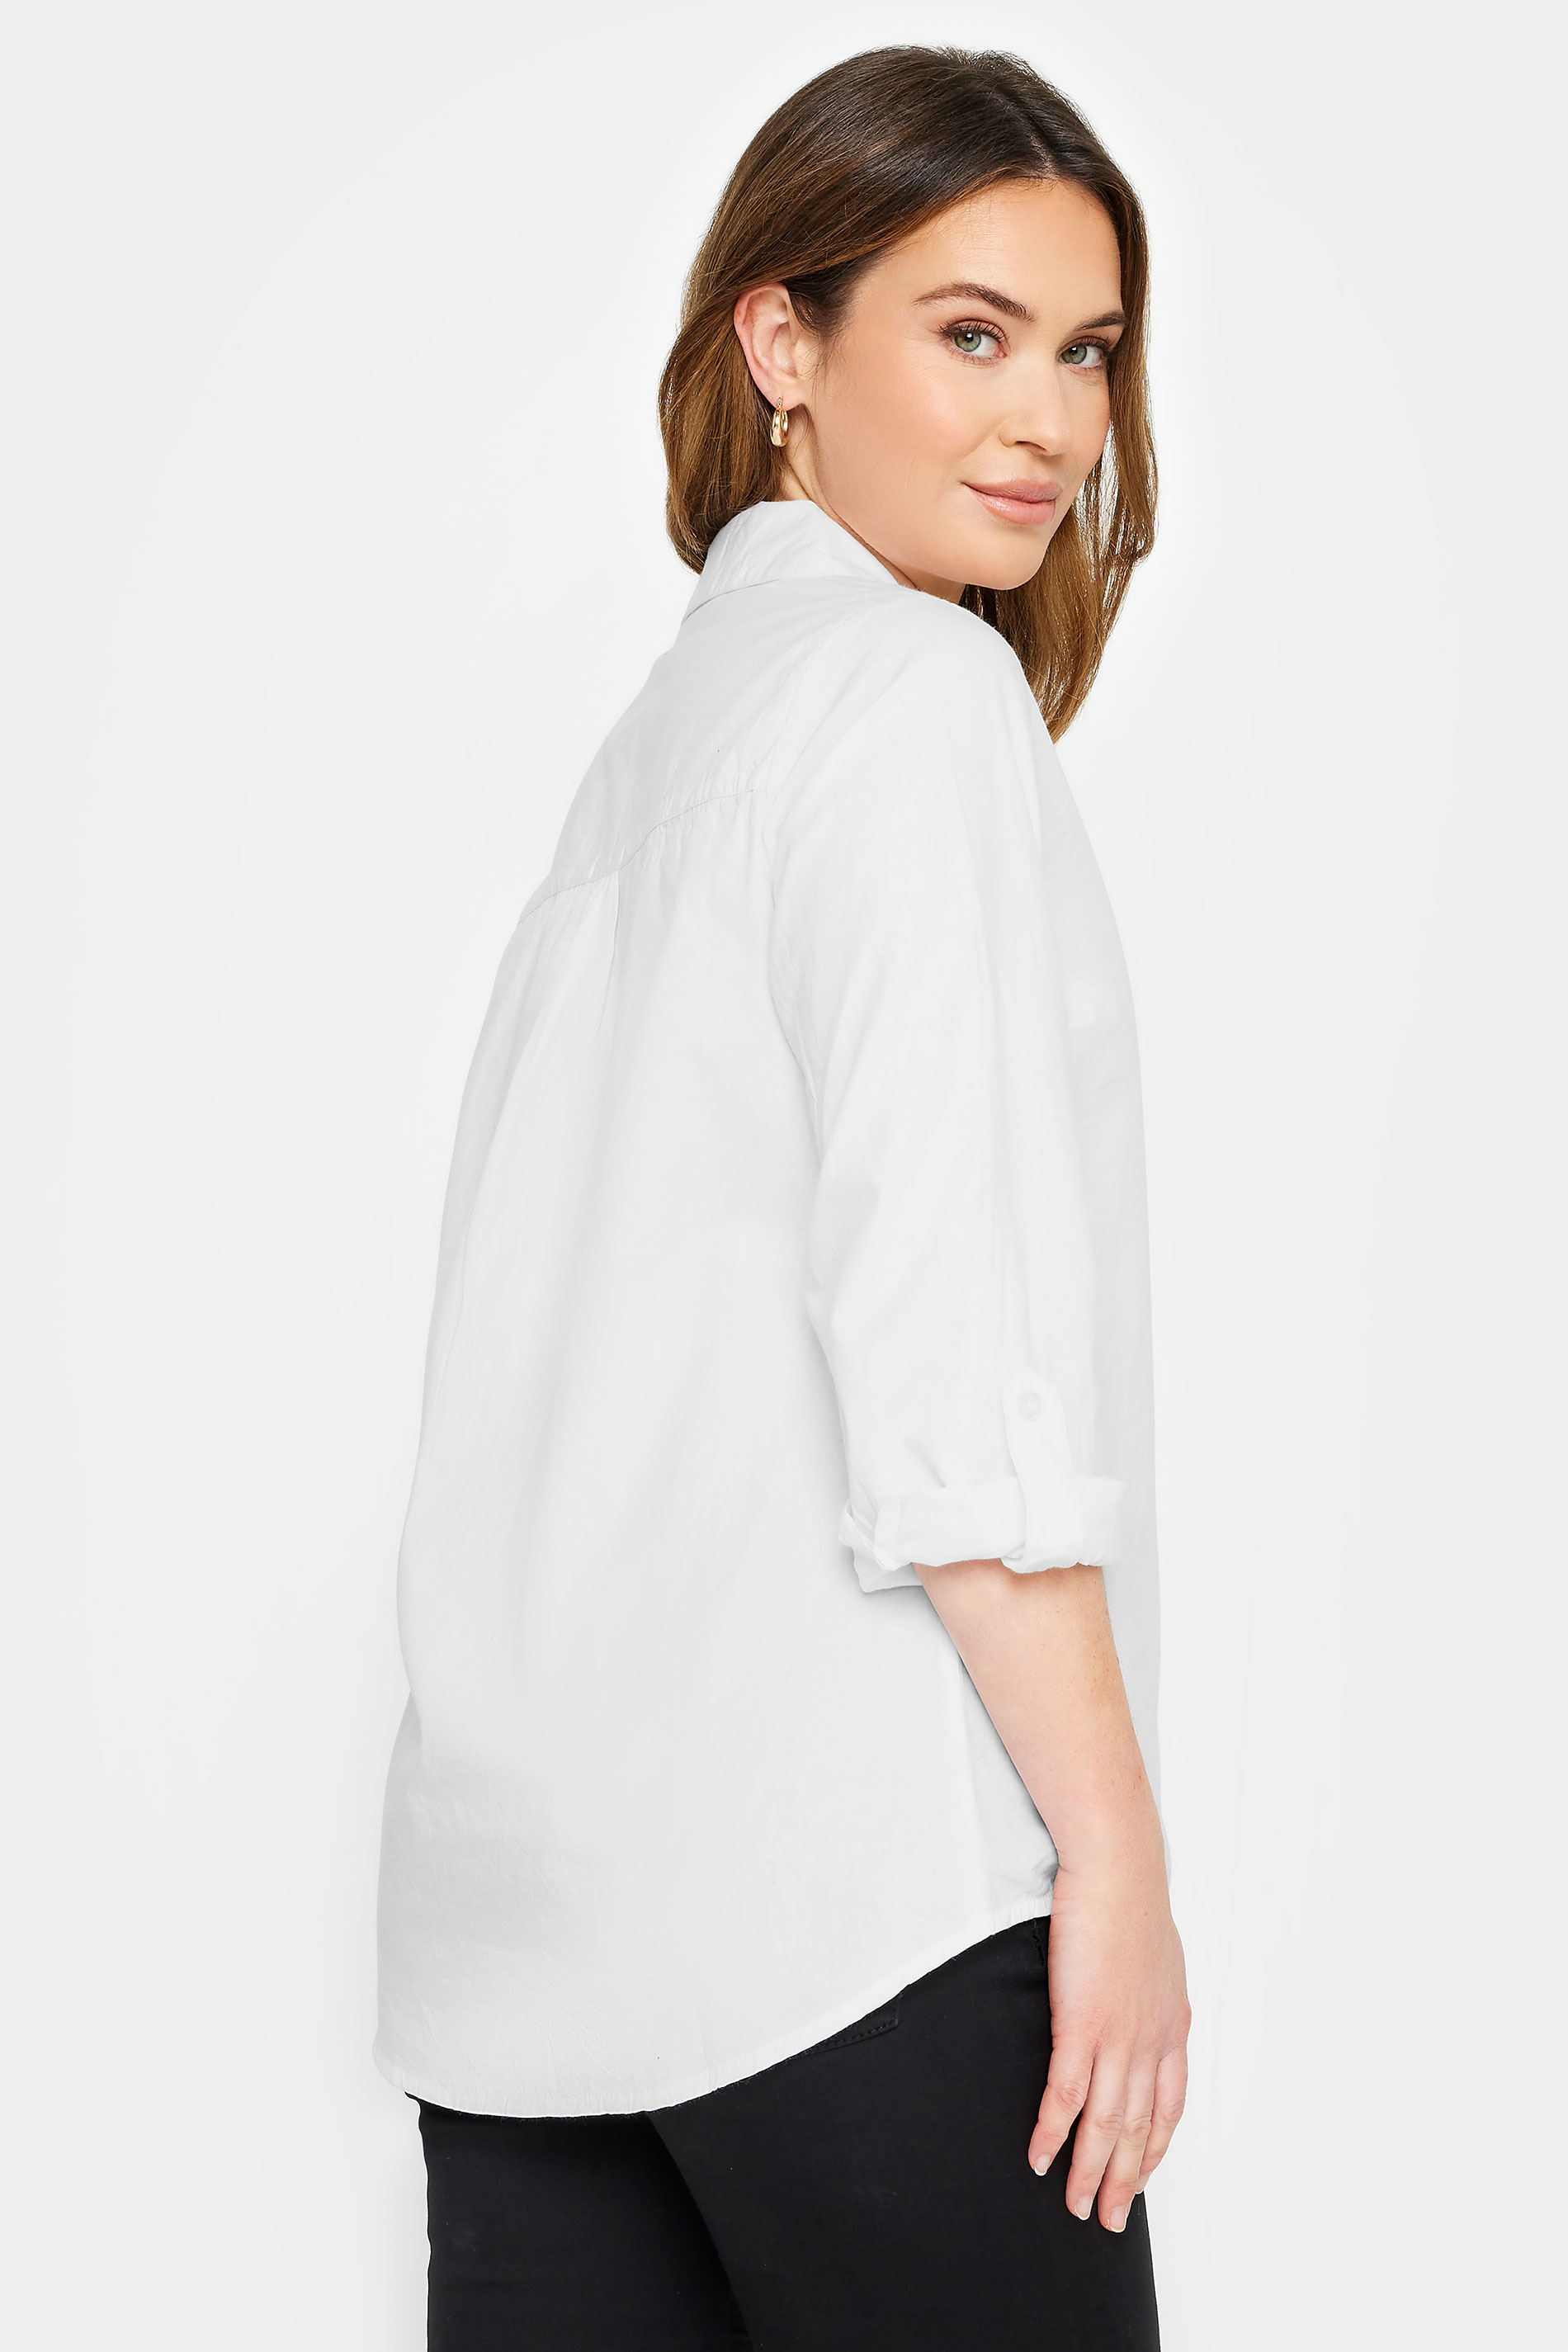 M&Co Petite White Oversized Cotton Poplin Shirt | M&Co 2